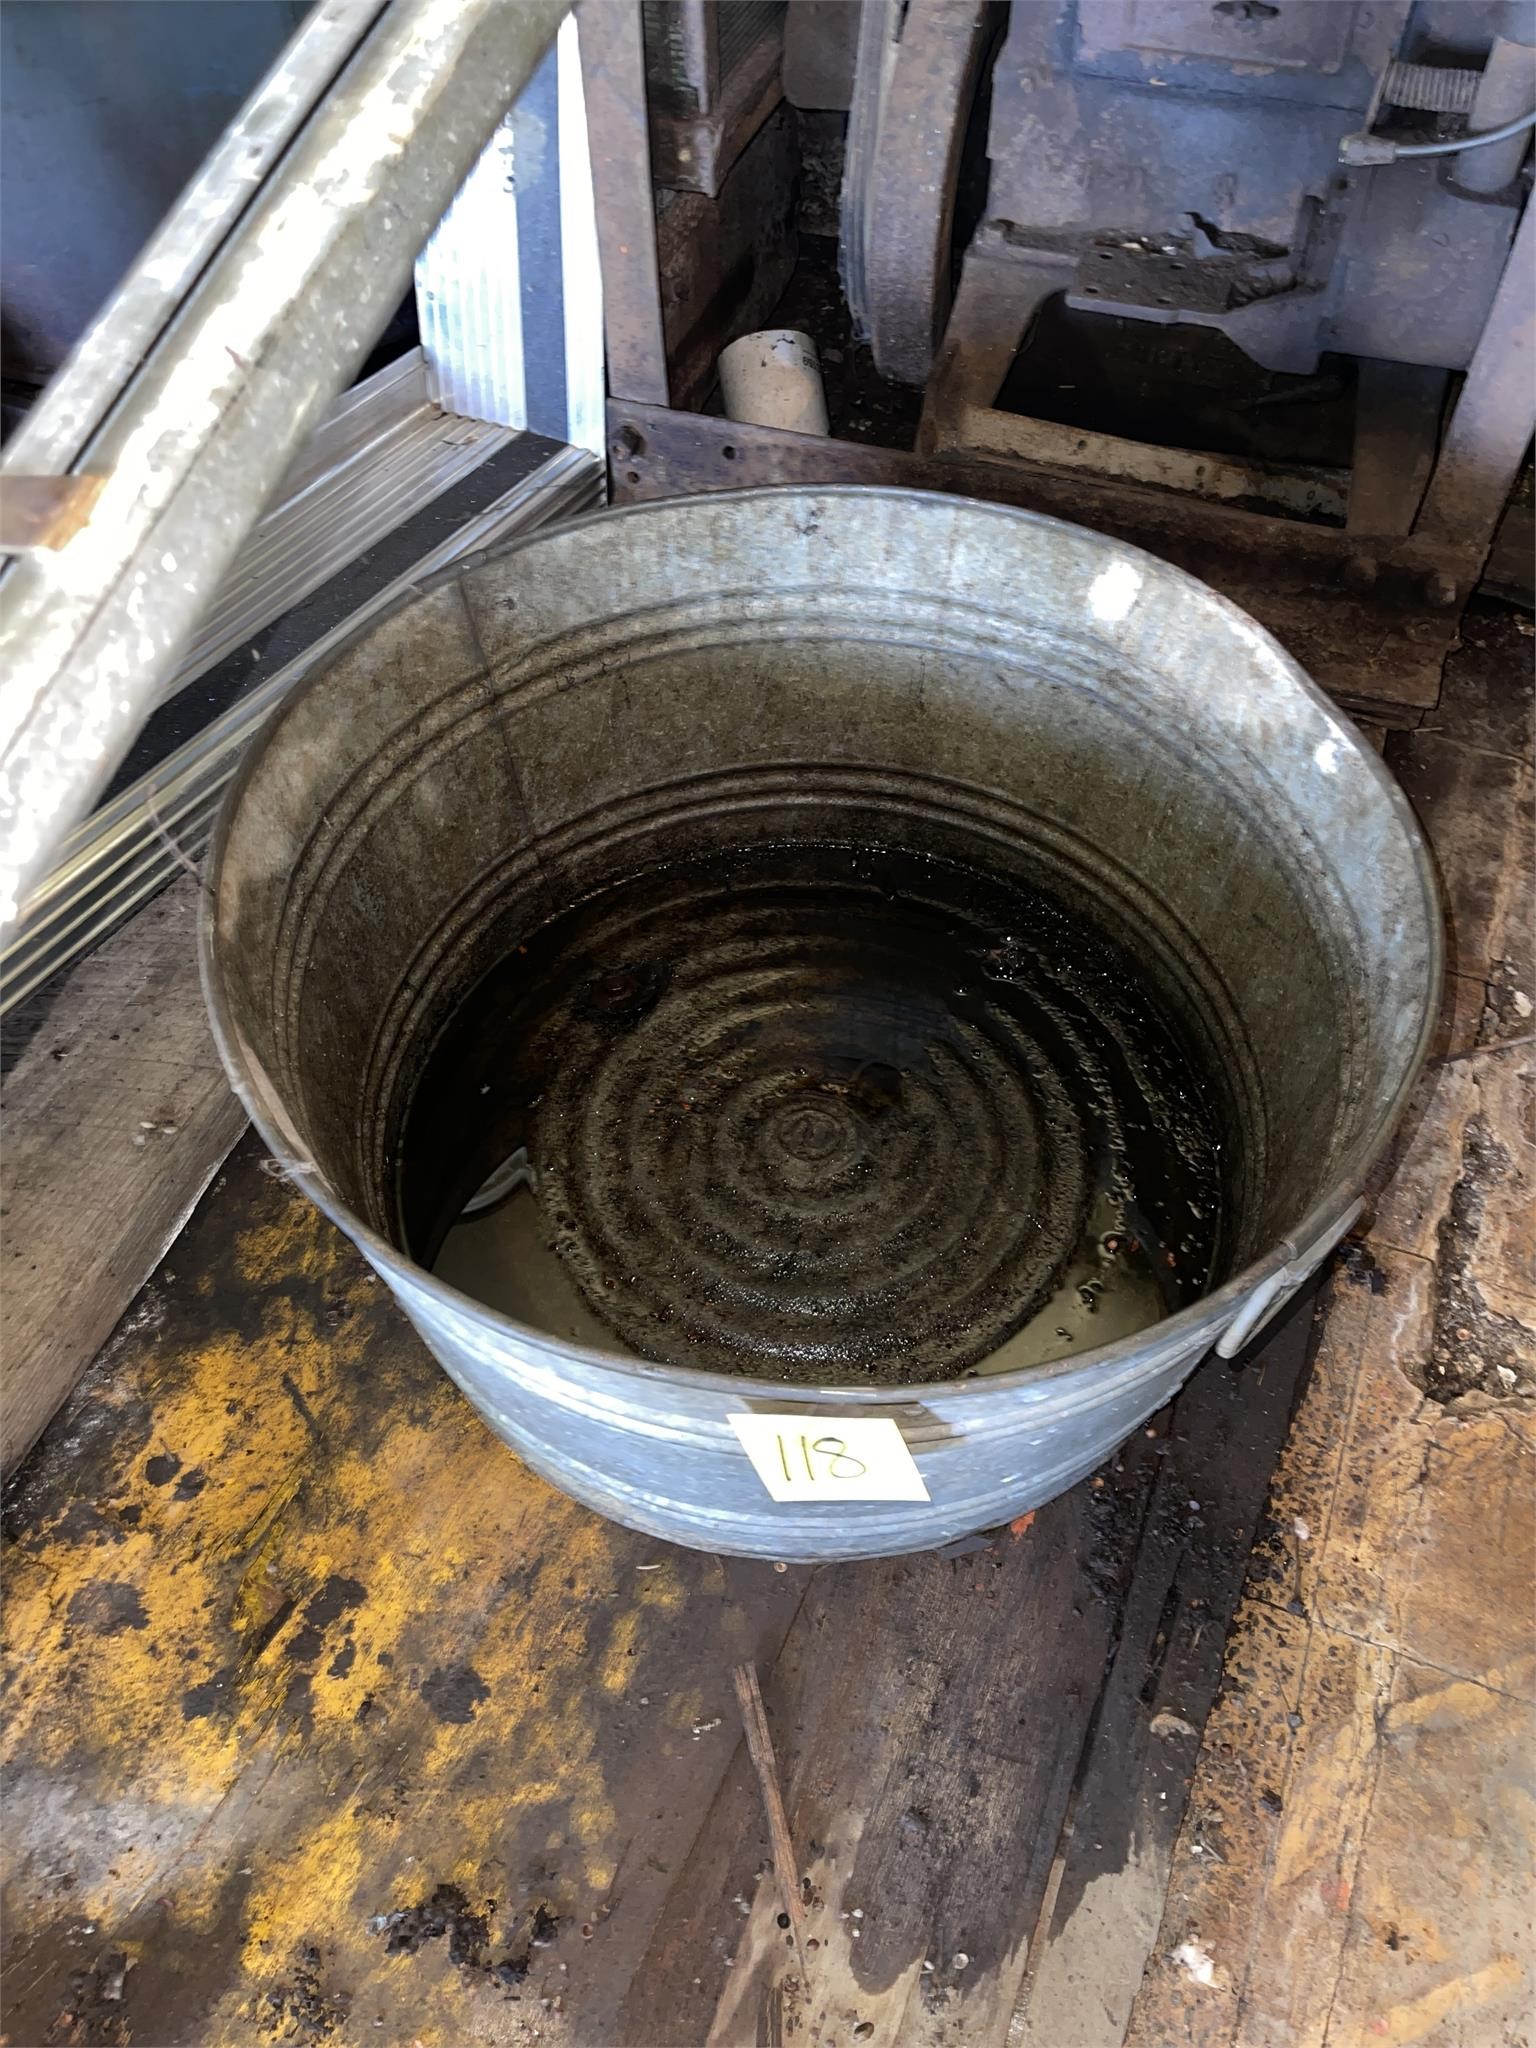 galvanized basin has a little oil in it